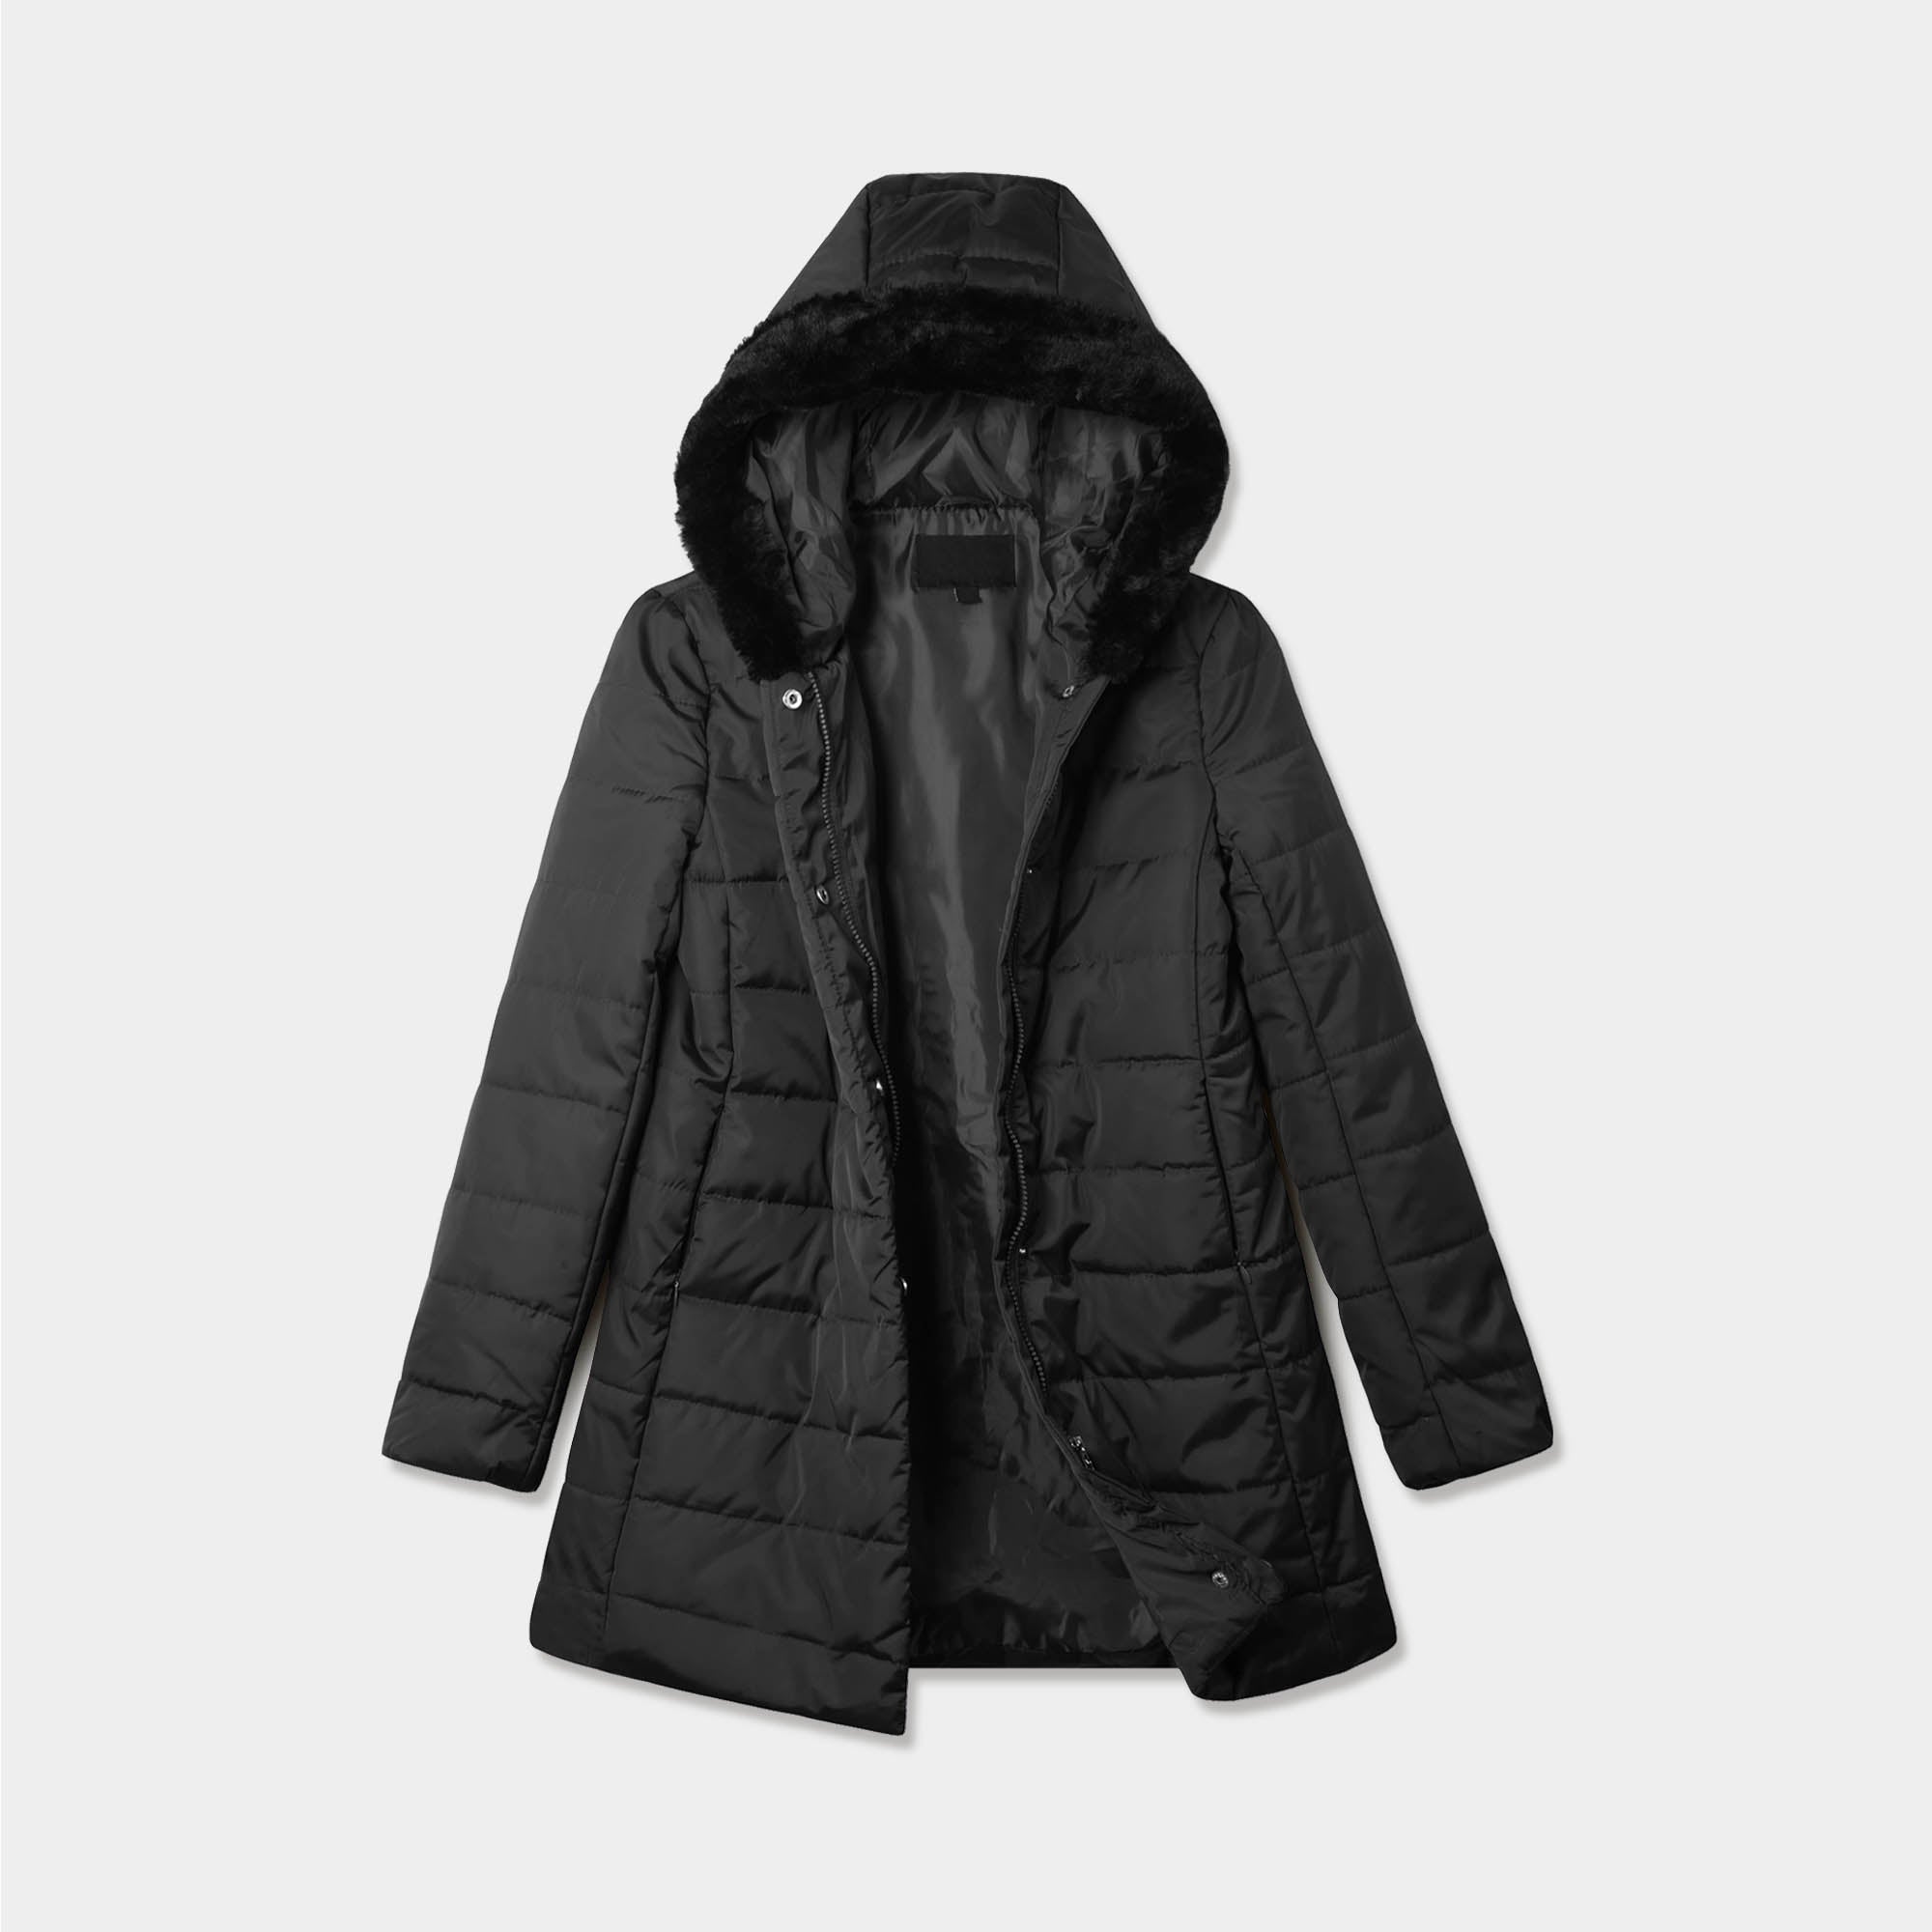 ZJHANHGKK hooded puffer jacket women long black coat women womens cardigan  plaid corduroy patch jacket suit jacket for women cheap stuff under 50